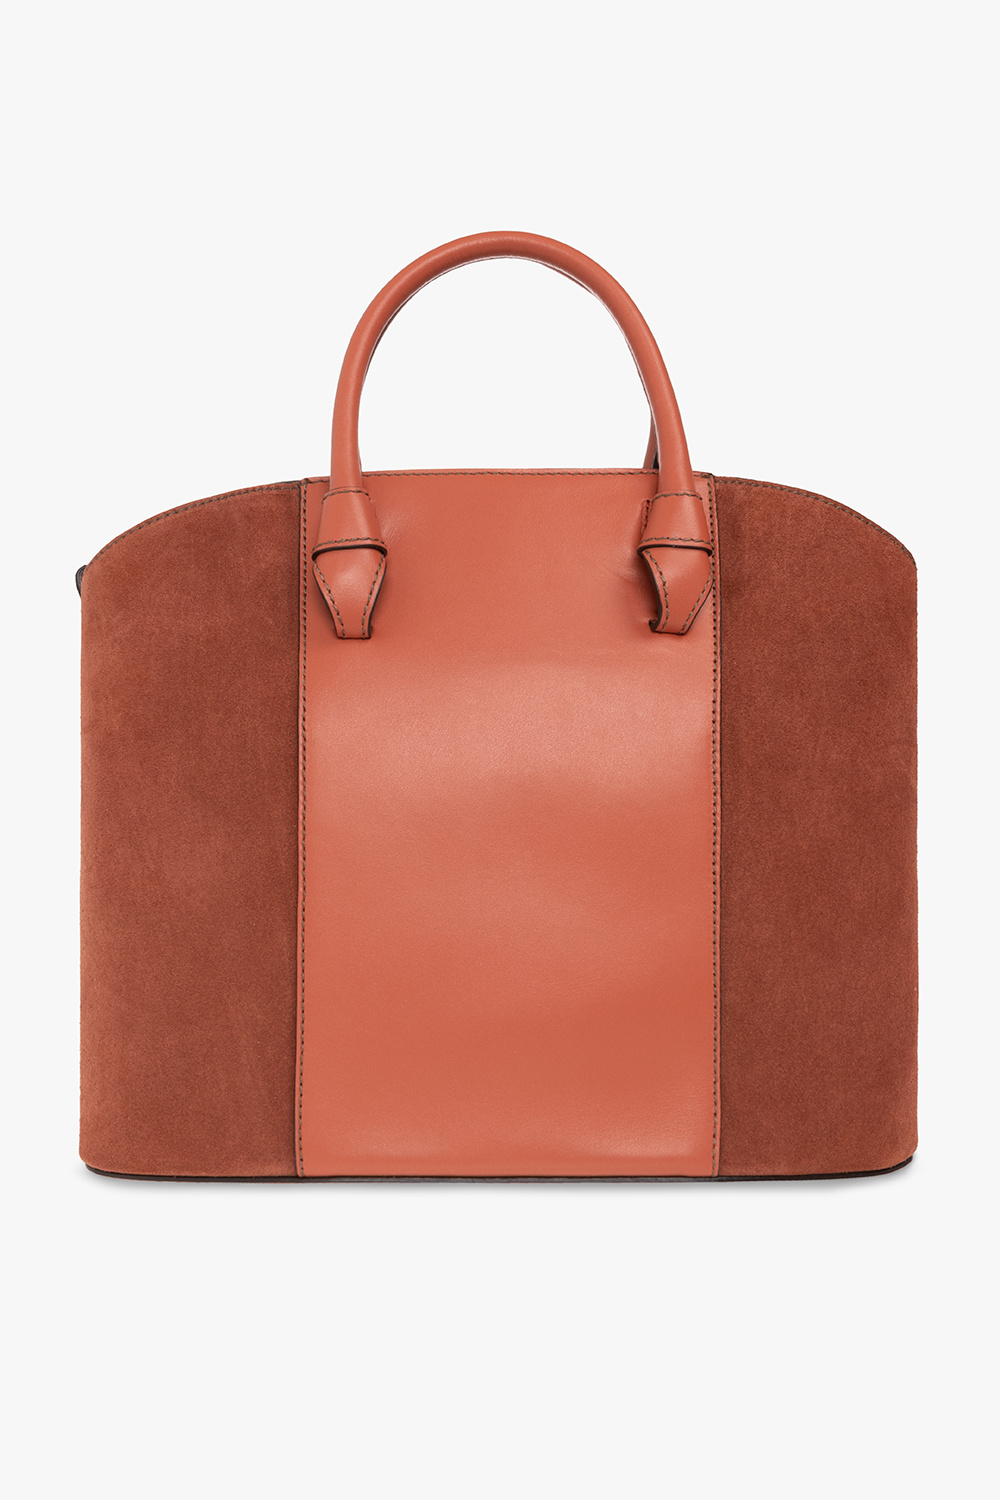 Furla ‘Miastella Large’ shopper red bag